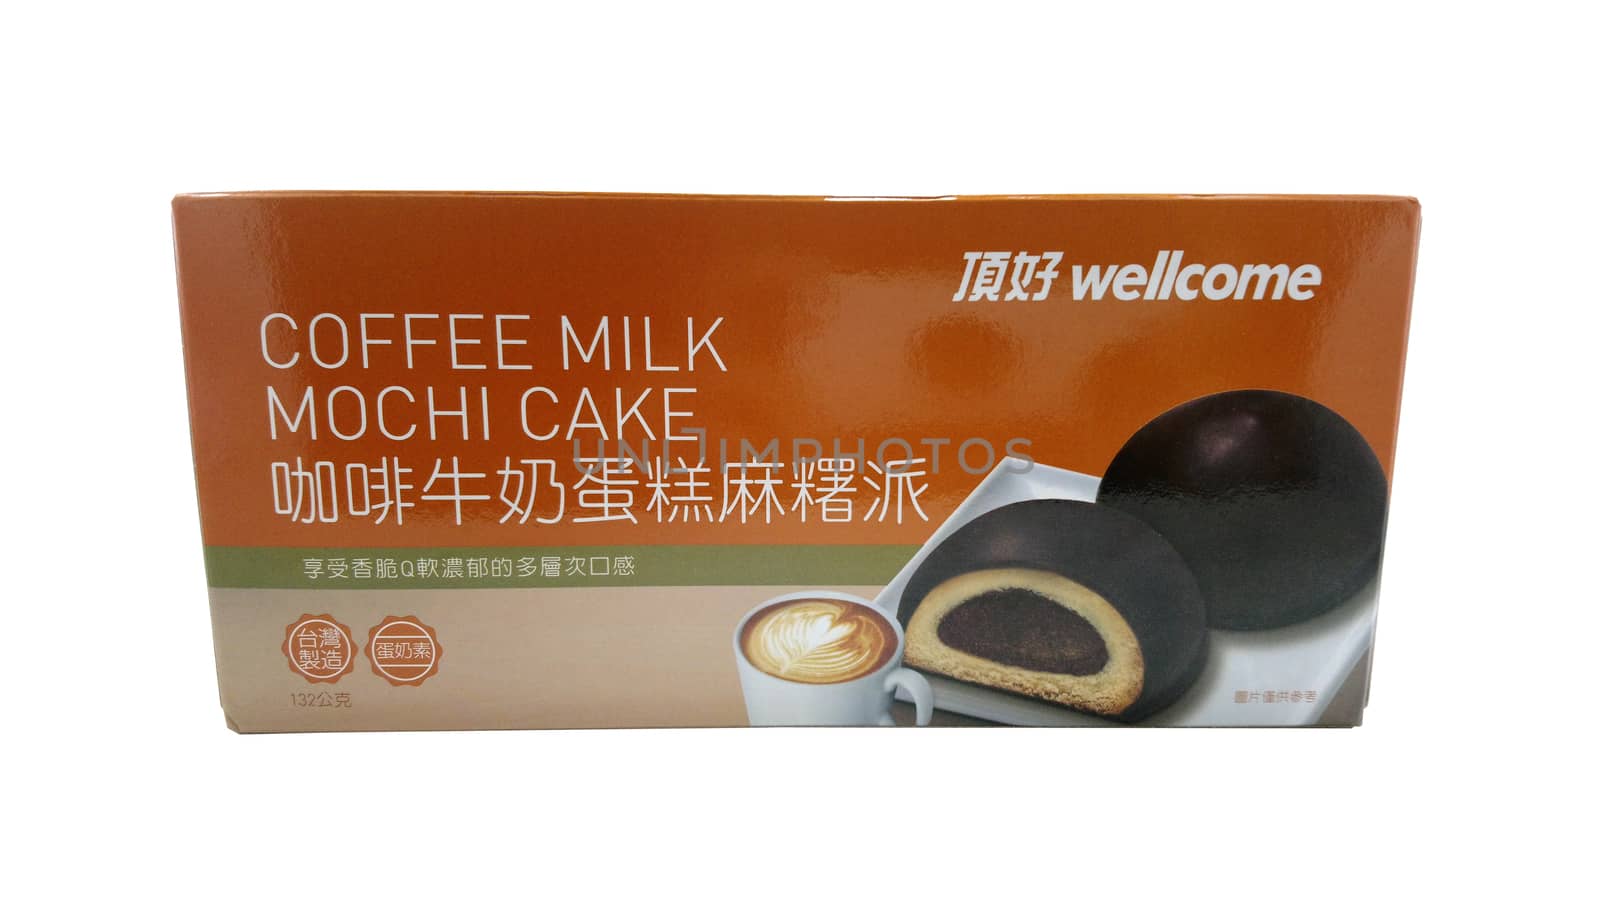 Wellcome coffee milk mochi cake in Manila, Philippines by imwaltersy